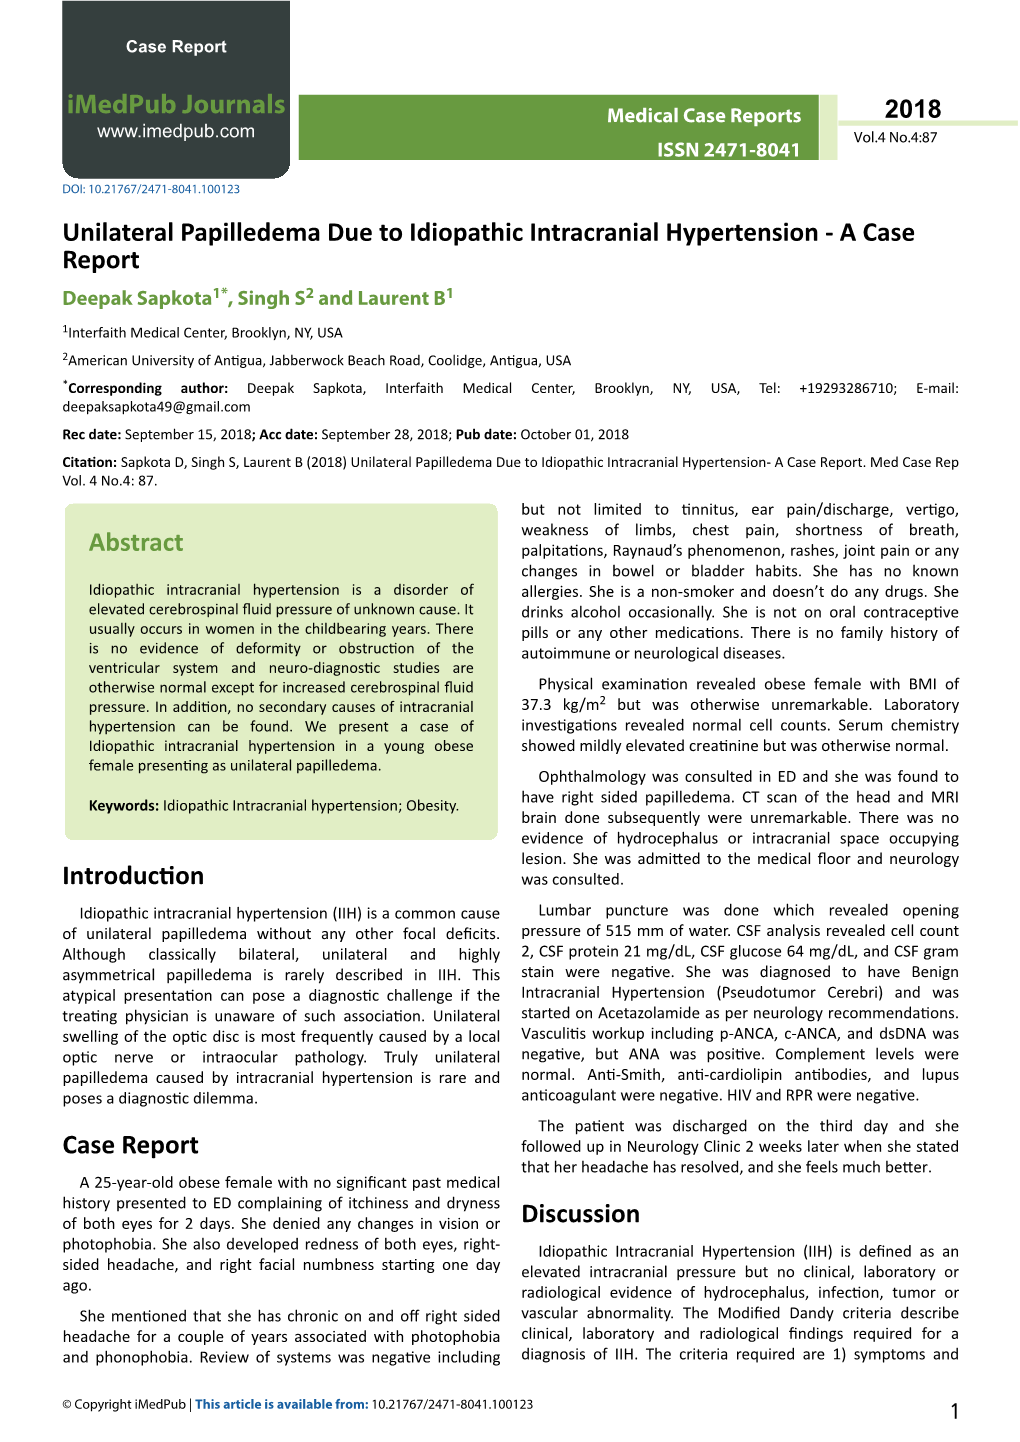 Unilateral Papilledema Due to Idiopathic Intracranial Hypertension - a Case Report Deepak Sapkota1*, Singh S2 and Laurent B1